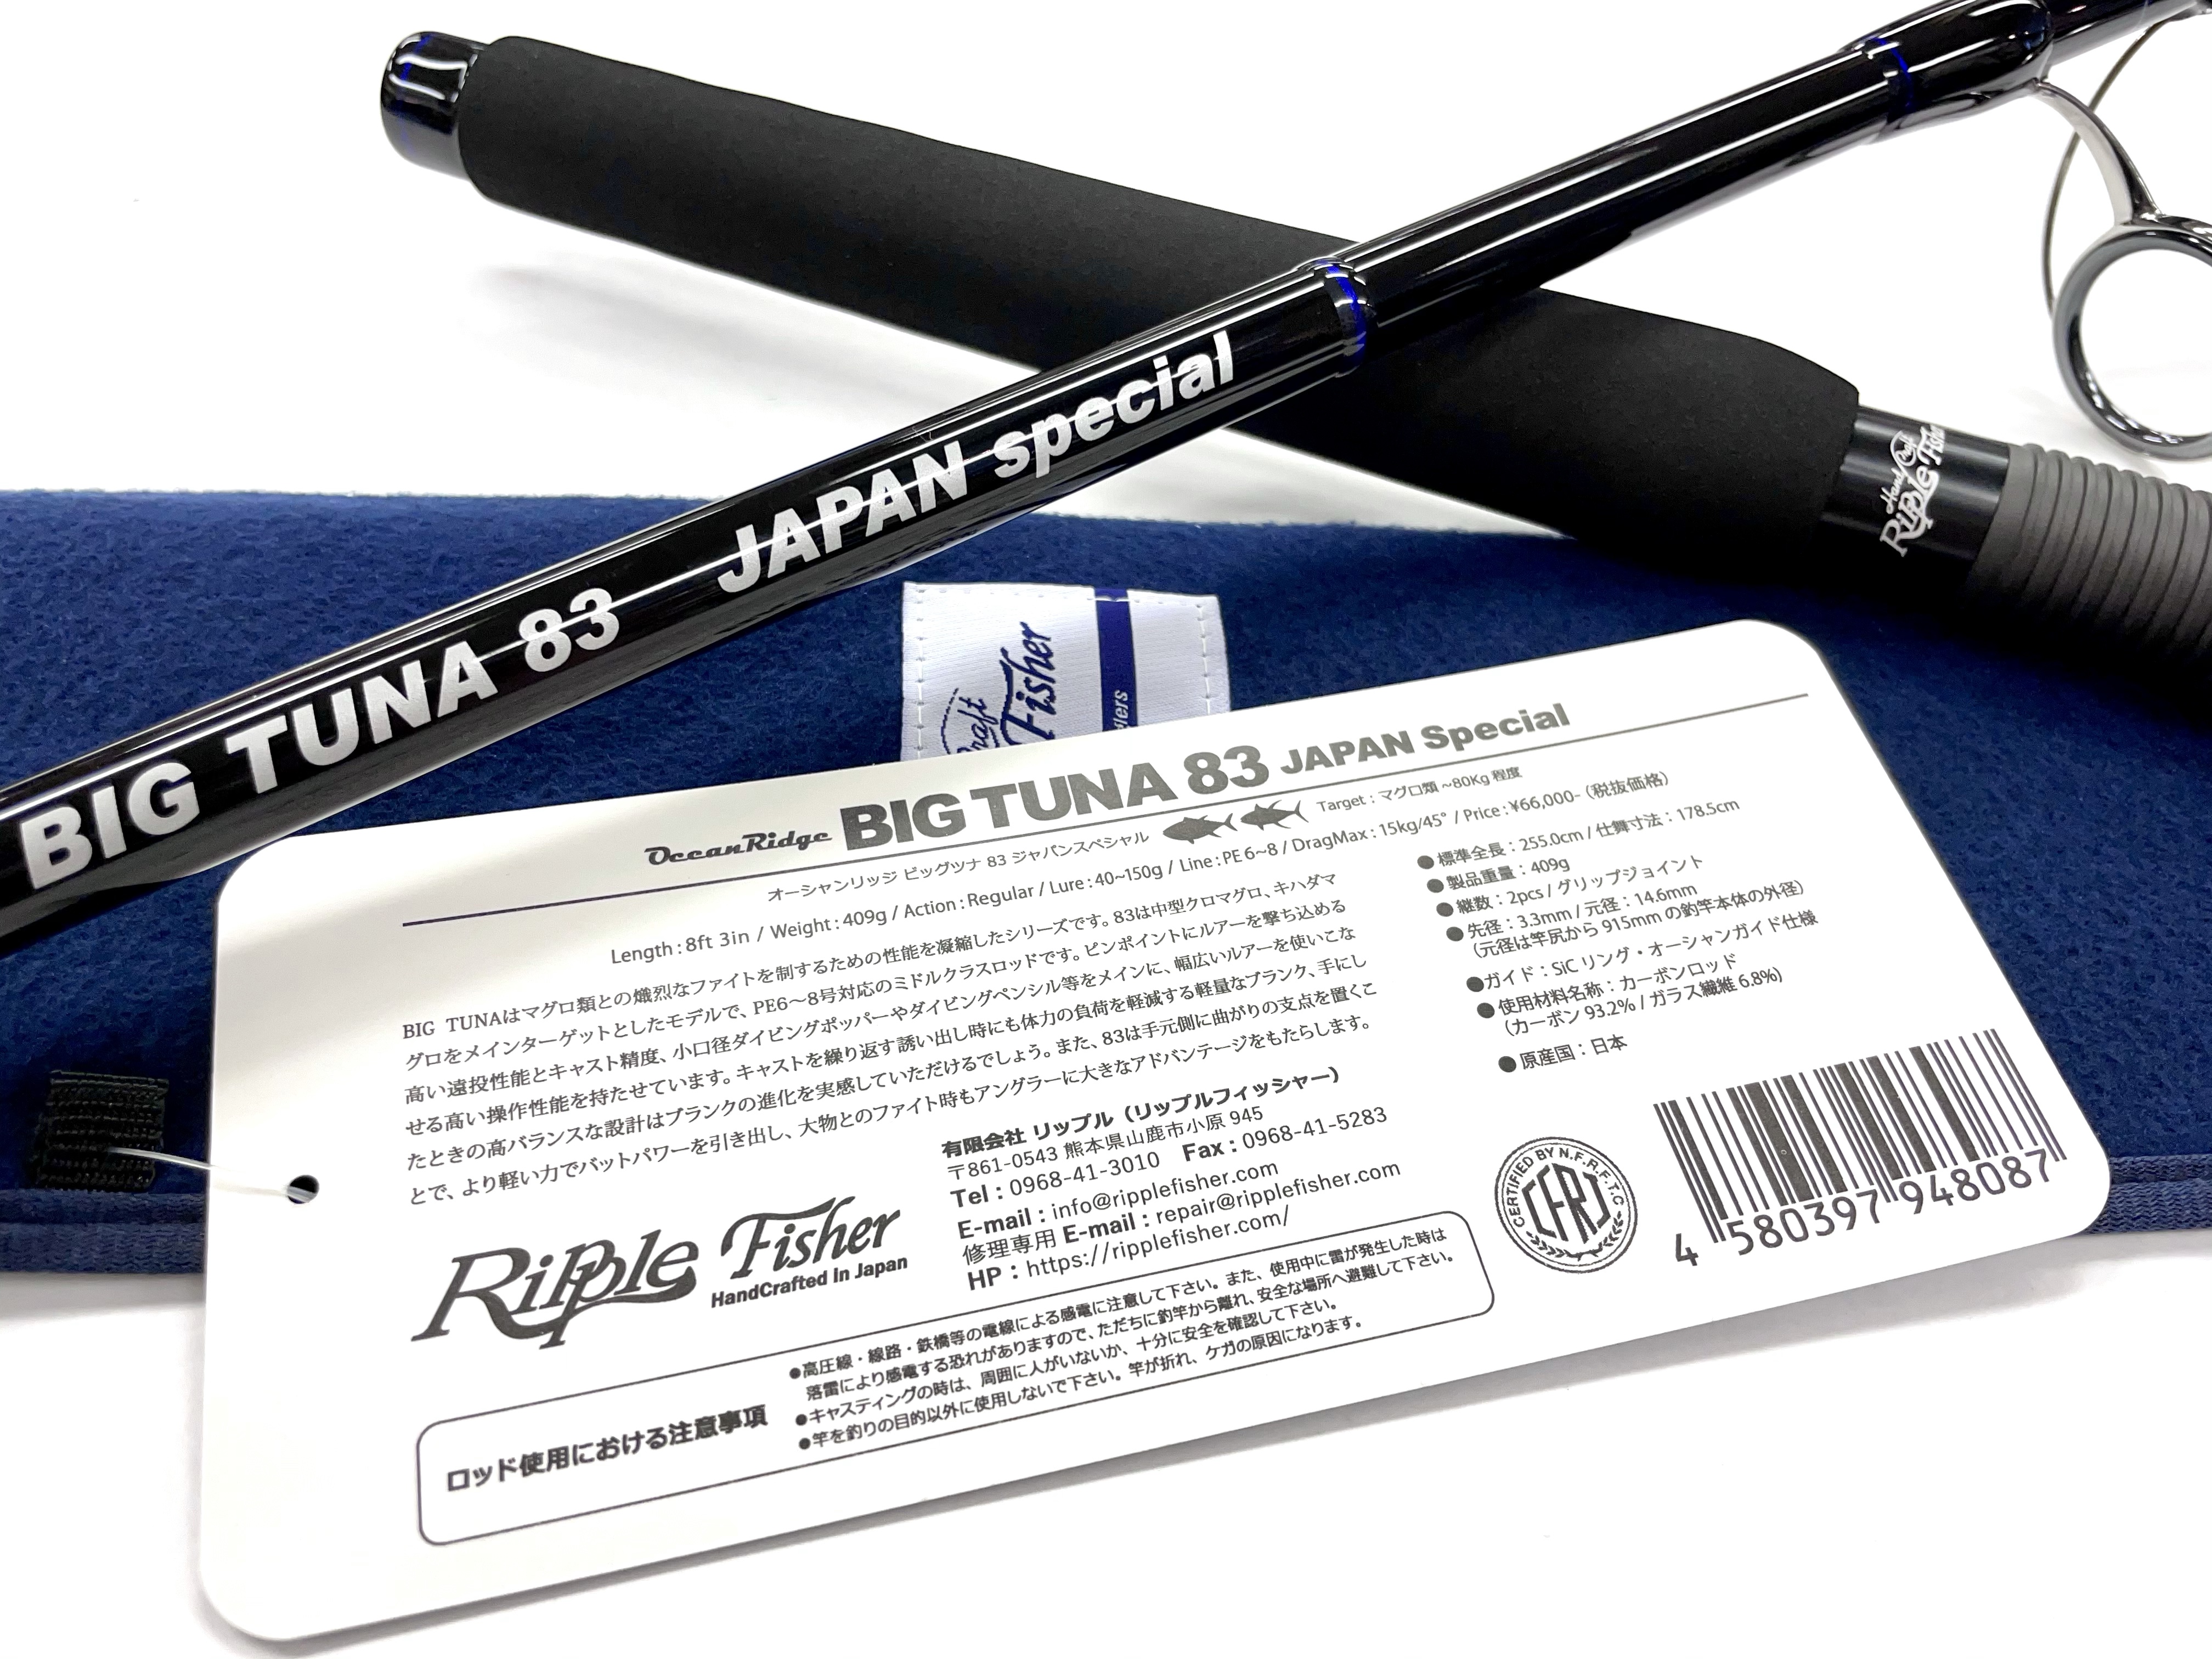 Ripple Fisher【Ocean Ridge BIG TUNA 83 JAPAN Special】 – サンスイ渋谷店 Part 1Part  2 SHIBUYA SANSUI